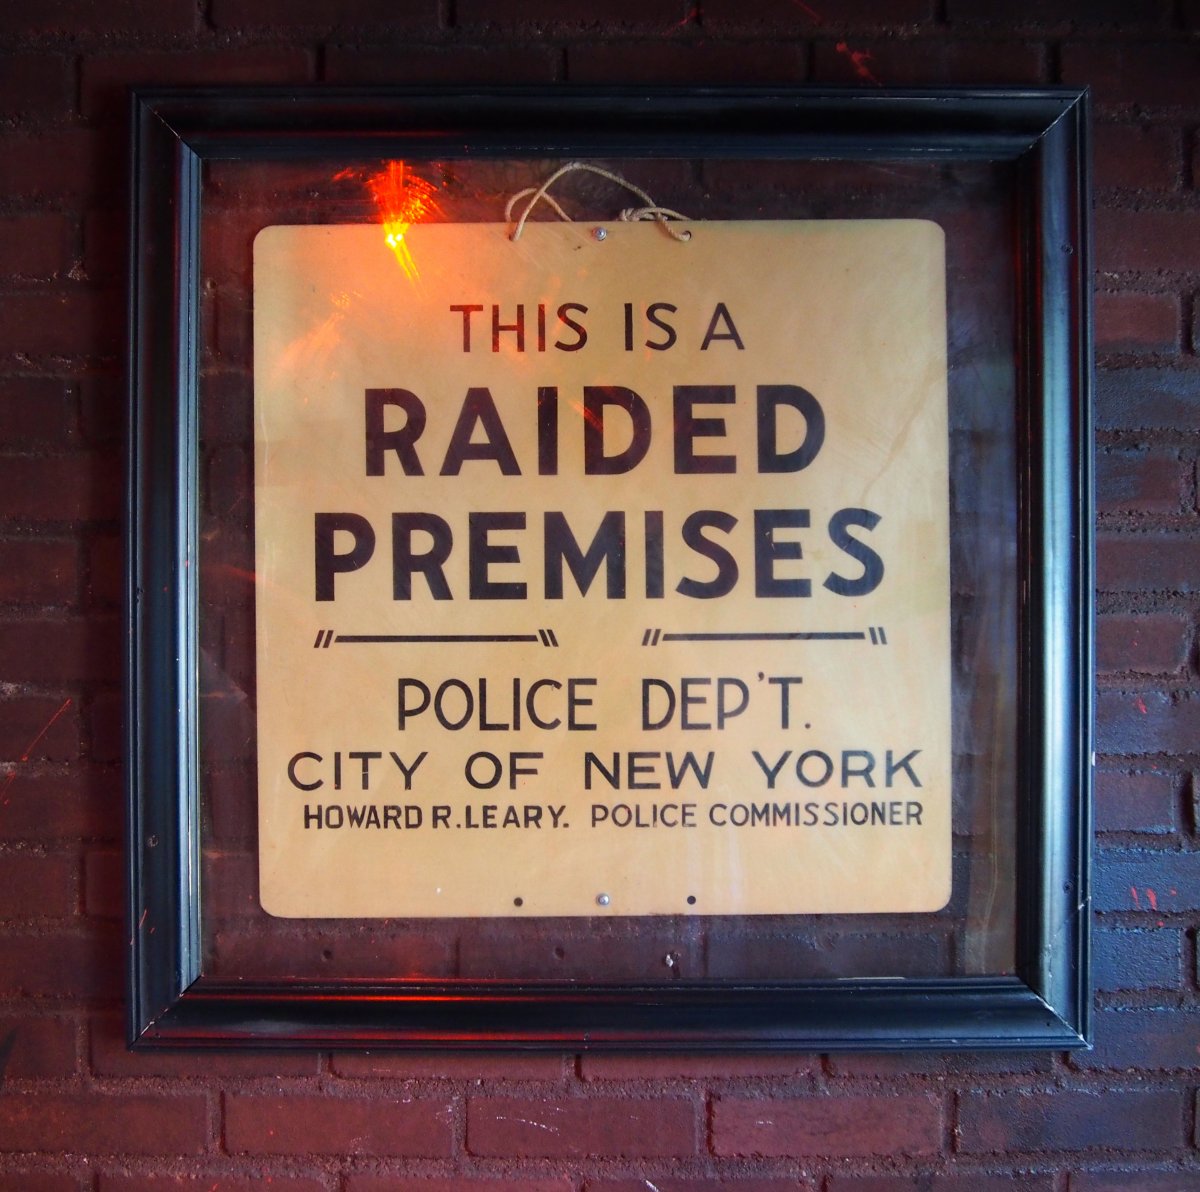  A 'raided premises' sign.